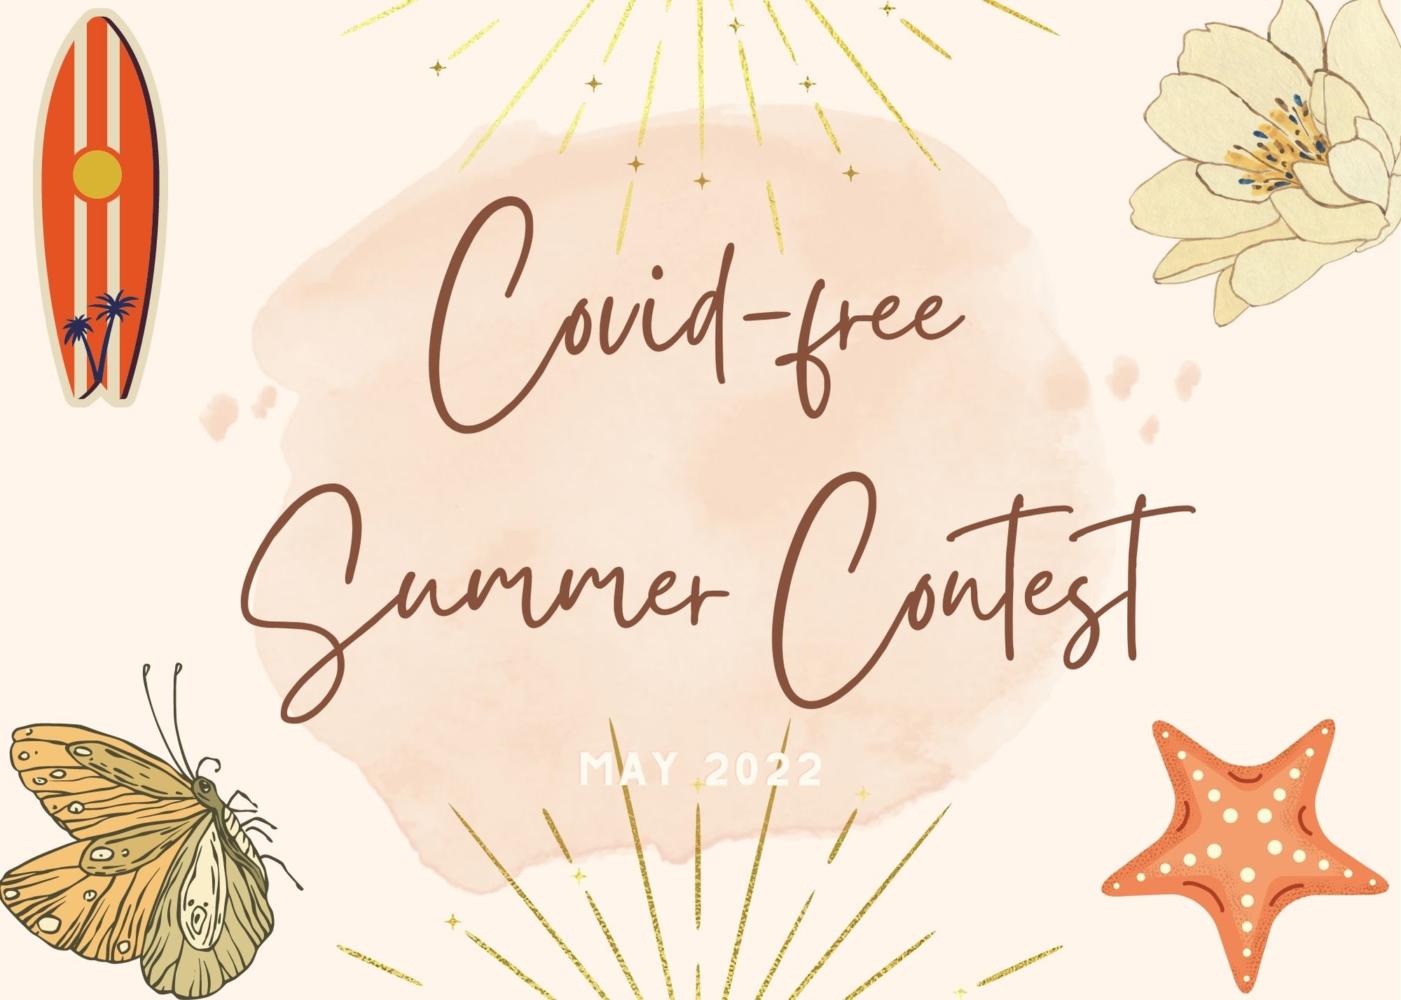 Covid-free Summer Contest 2022